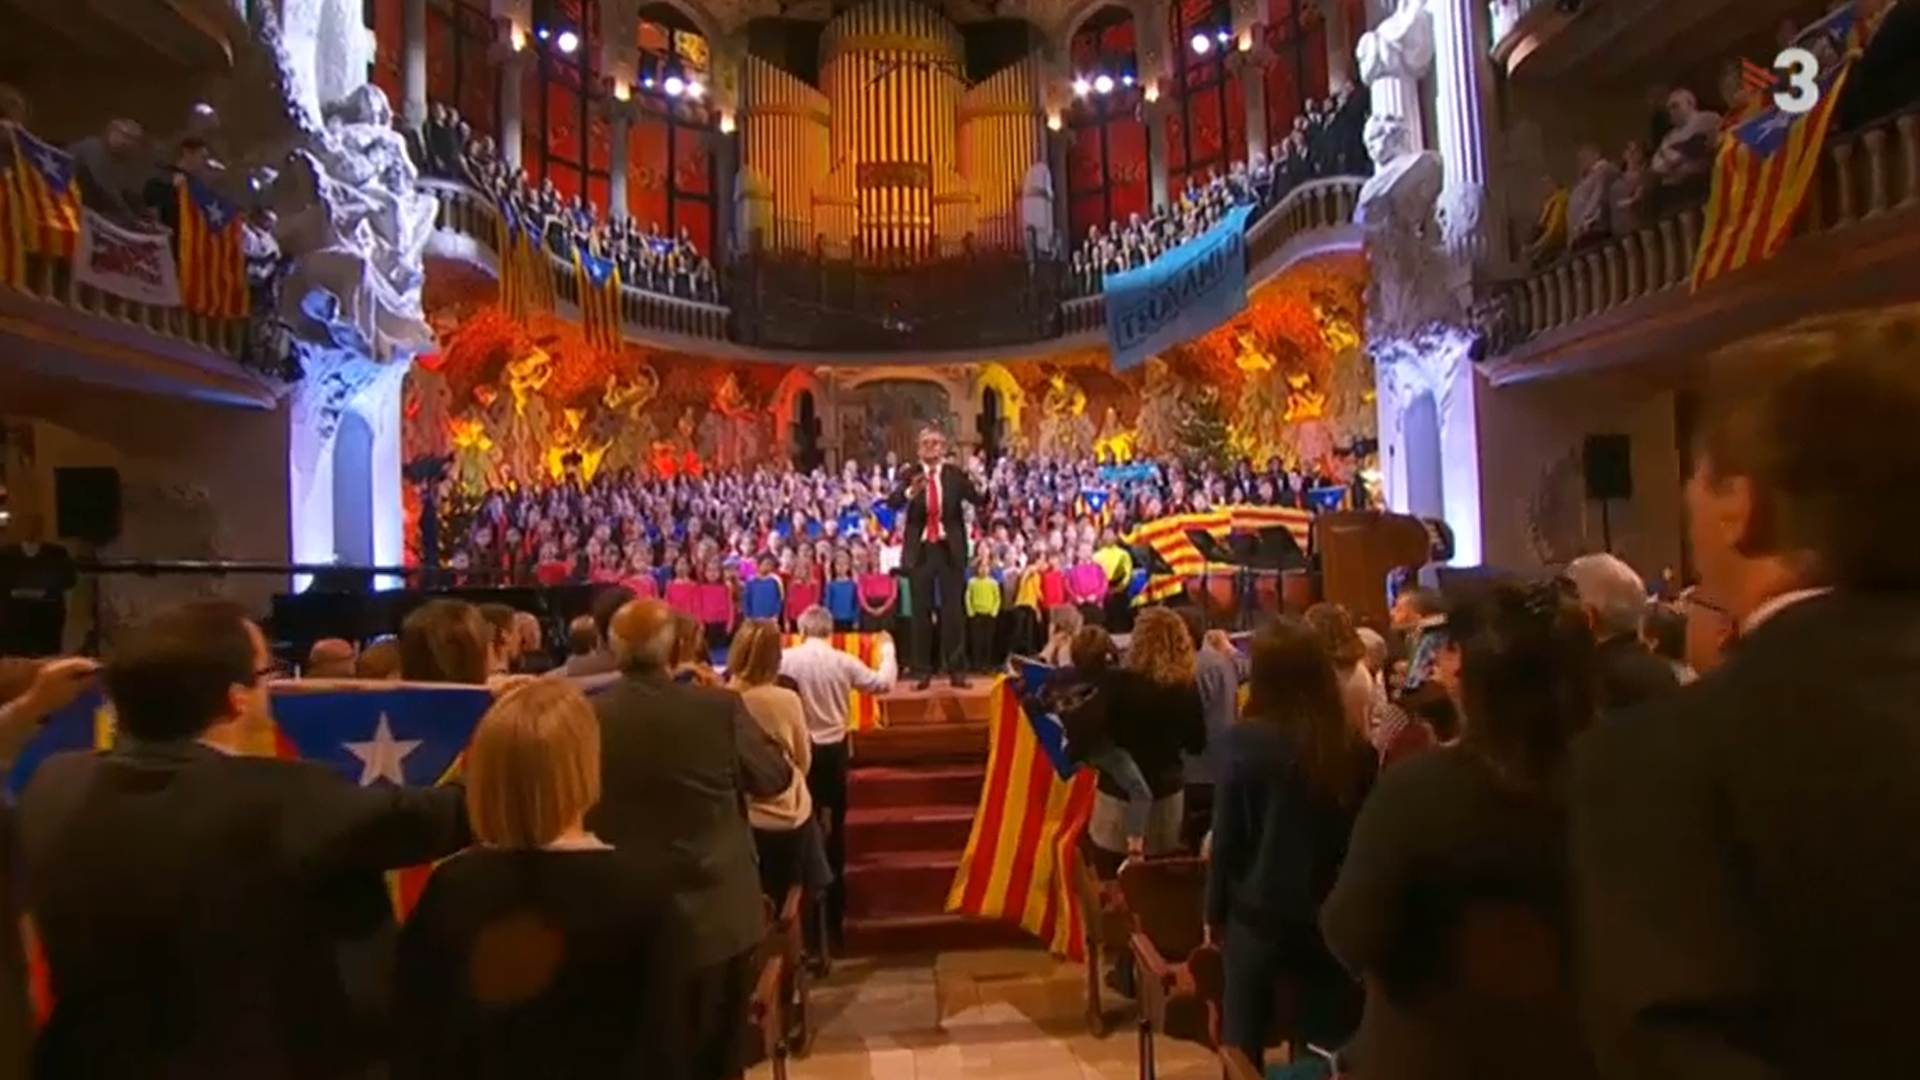 VIDEO | Tsunami Democràtic reappears at choral concert in Barcelona's Palau de la Música